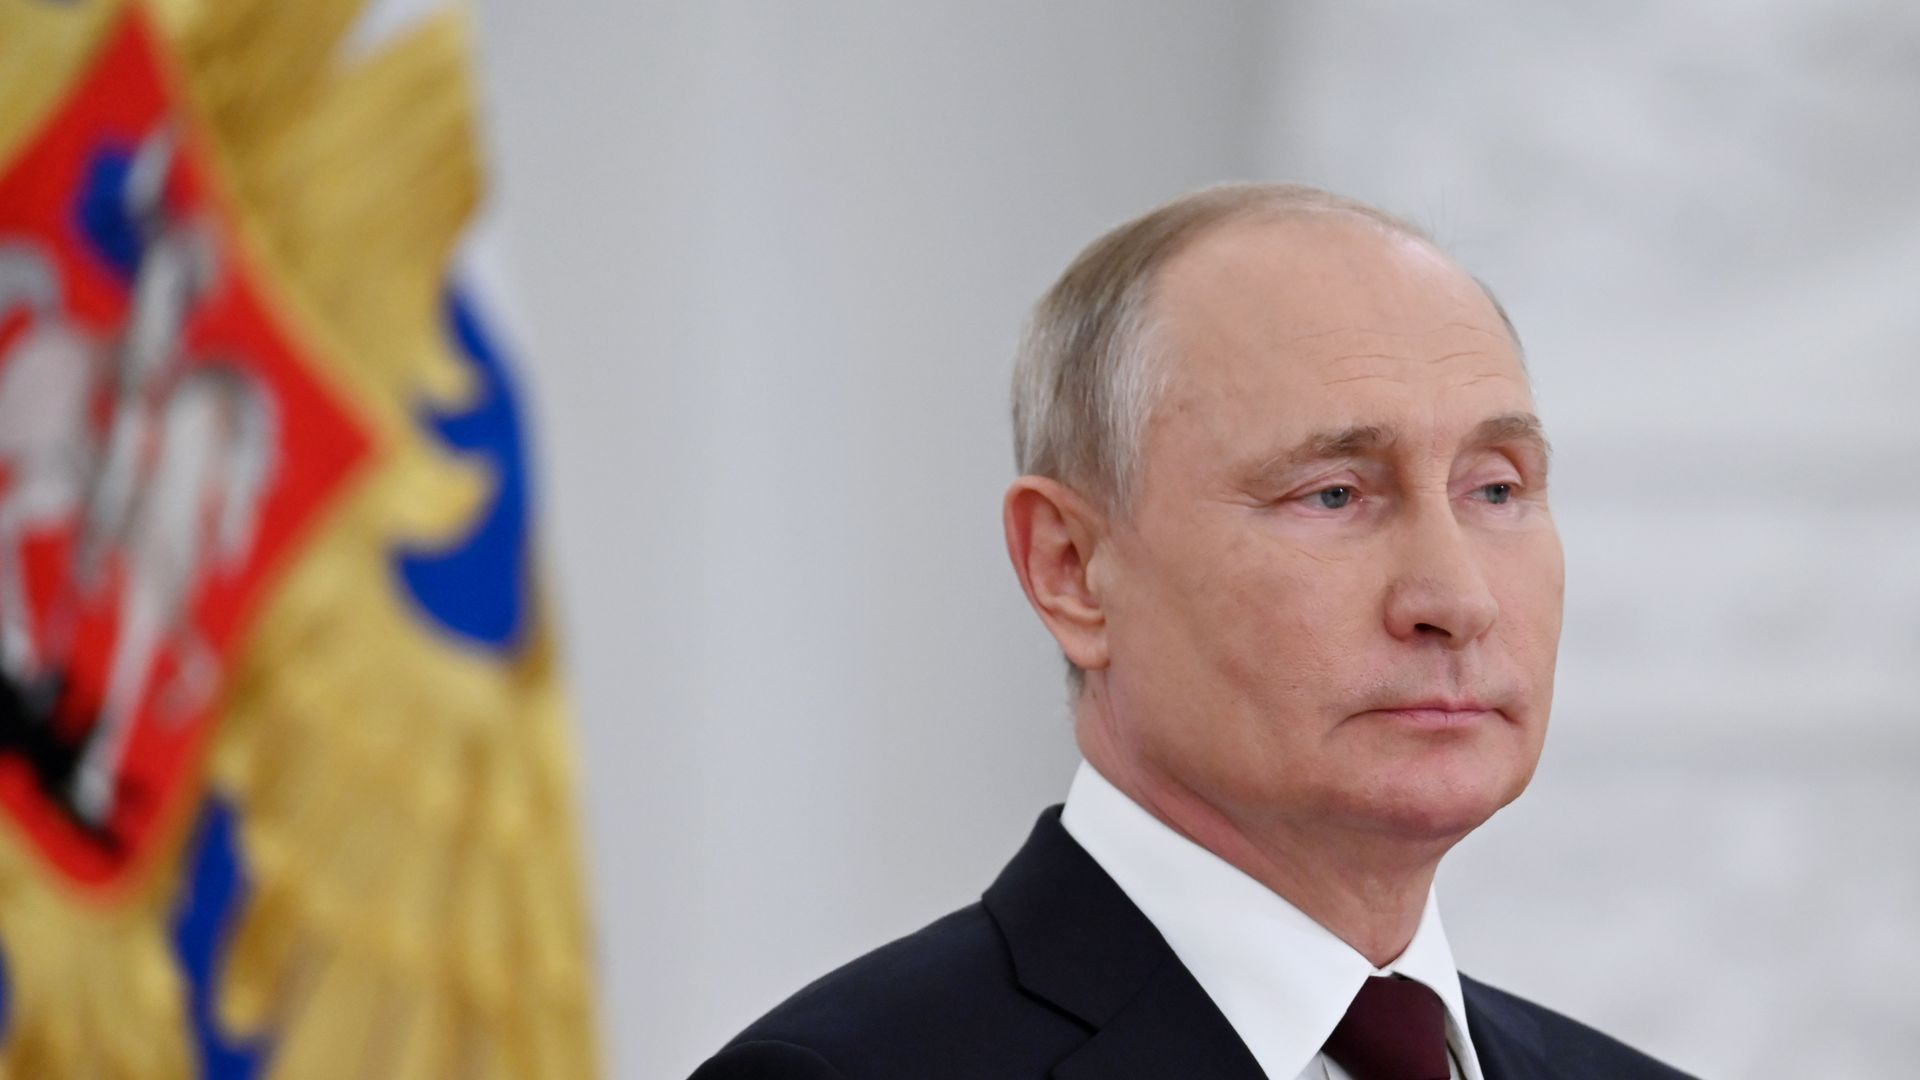 Russian President Vladimir Putin speaking in Moscow in June 2021.